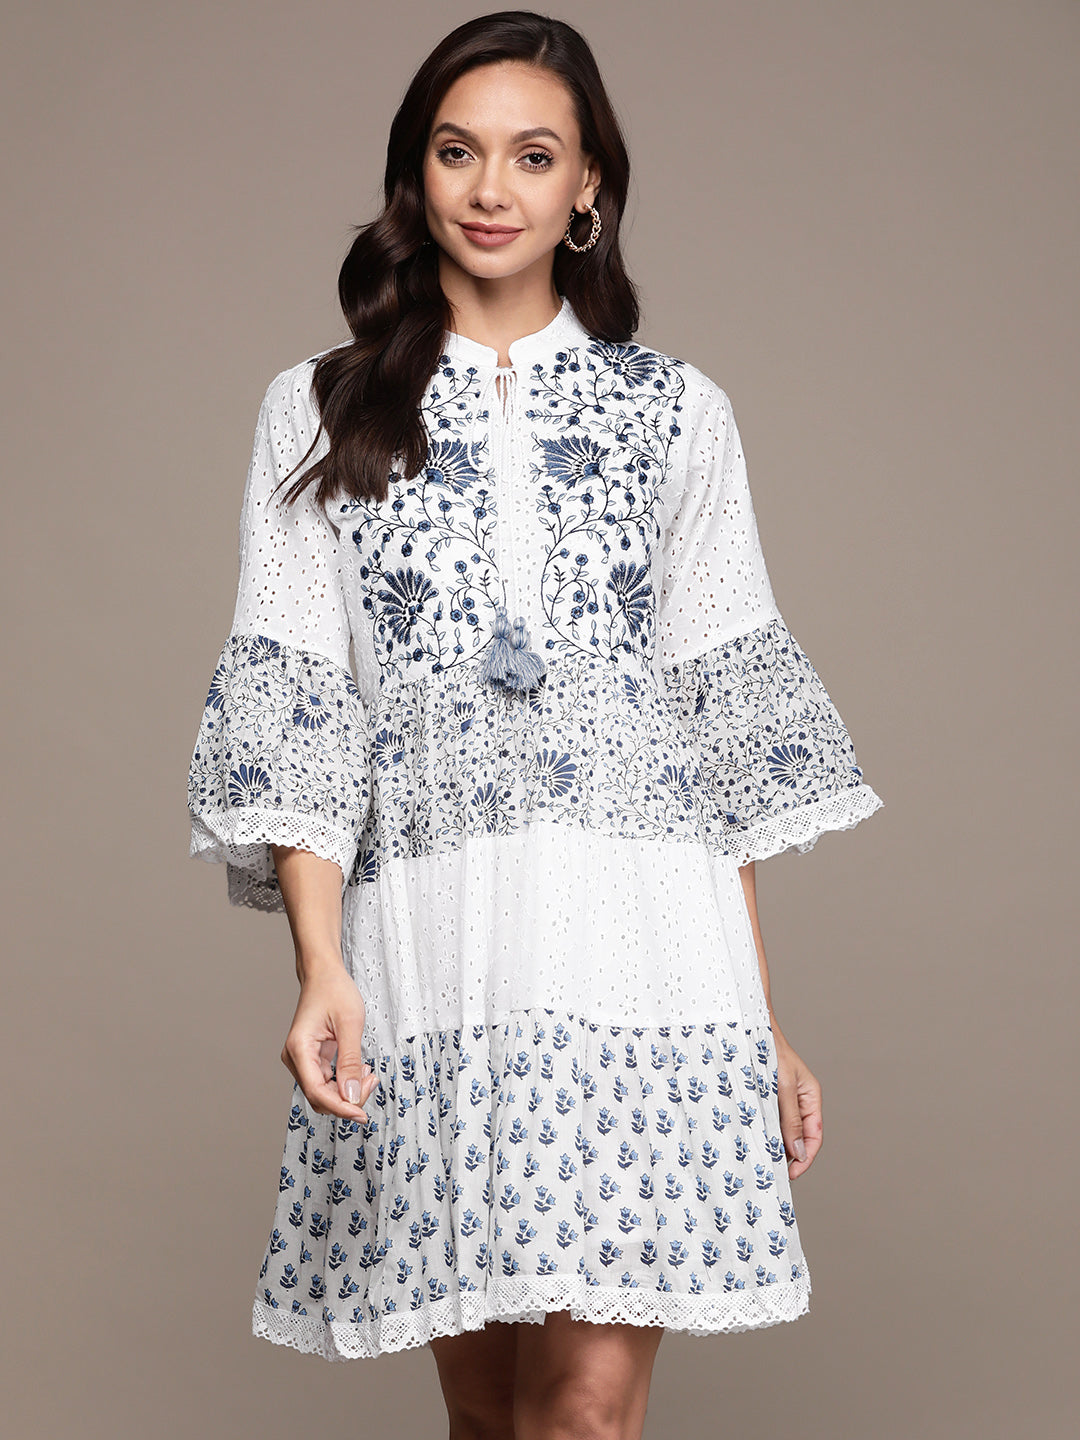 Ishin Women's White Floral A-Line Dress